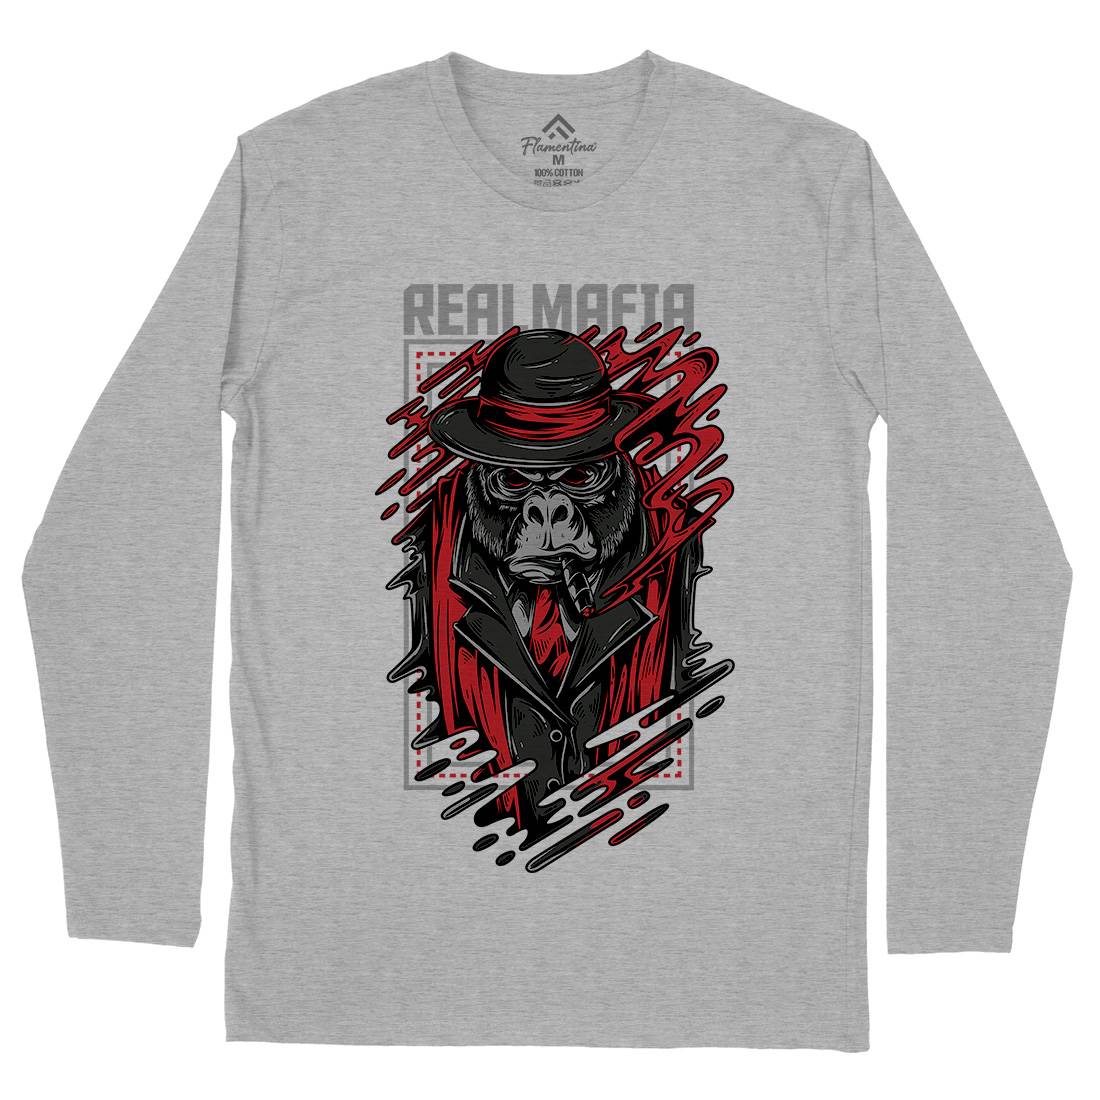 Real Mafia Mens Long Sleeve T-Shirt animals D690